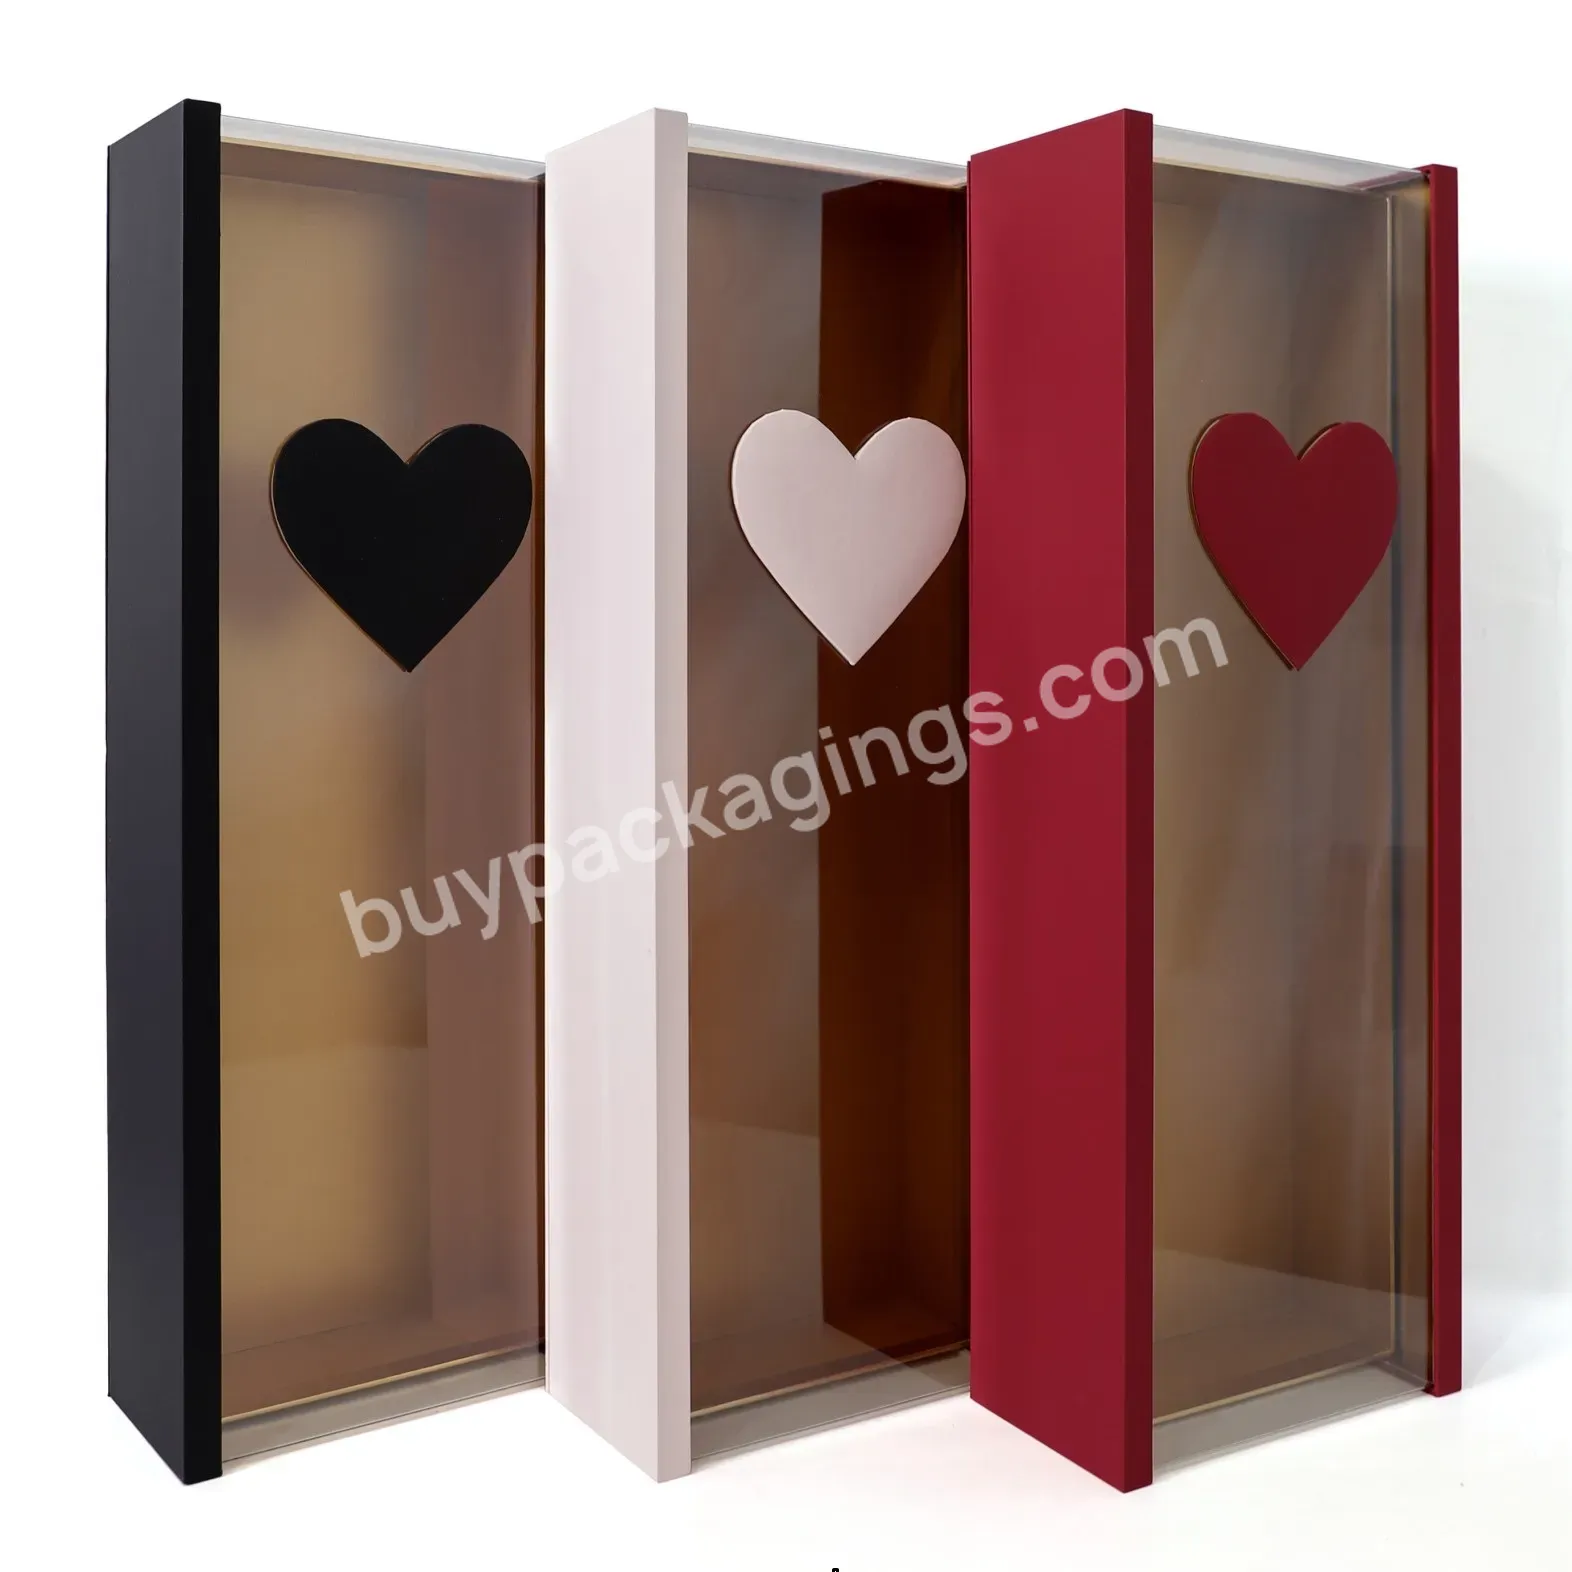 Luxury Acrylic Flower Gift Box Rectangular Paperboard Box With Heart Shape Printed - Buy Acrylic Flower Gift Box,Rectangular Paperboard Box,Box With Heart Shape Printed.